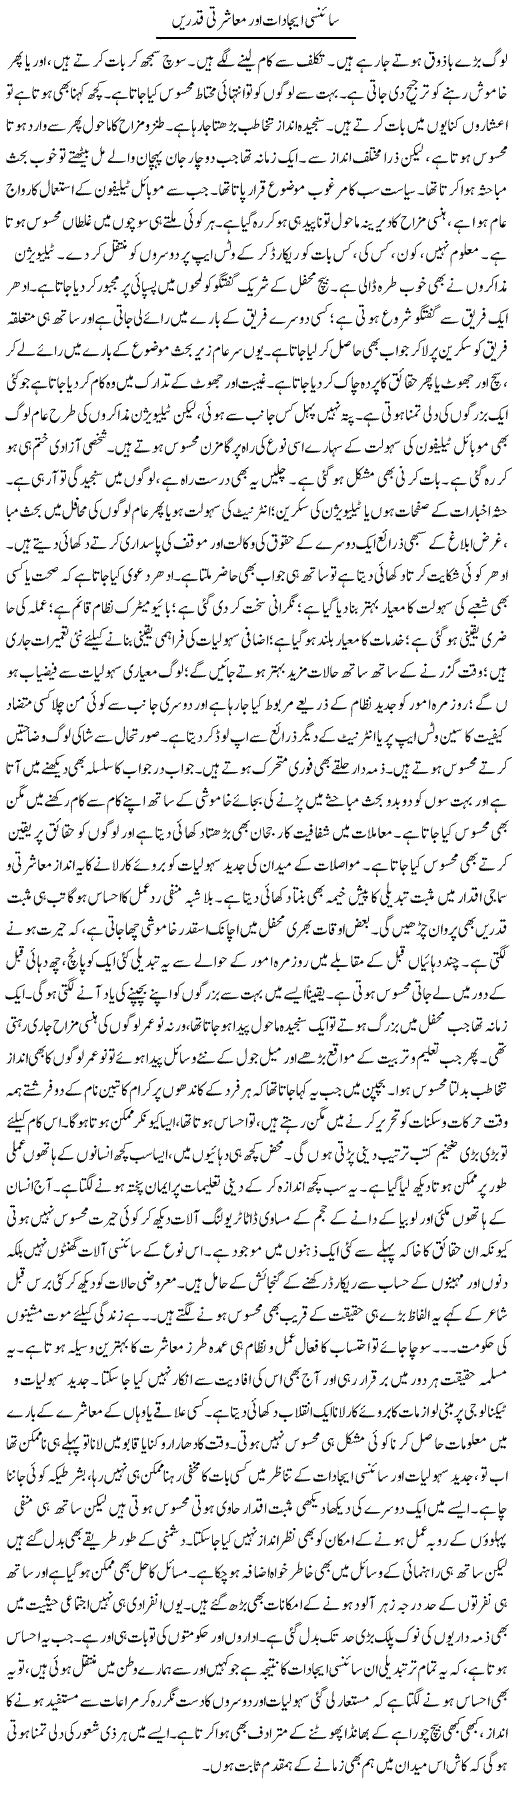 Scienci Ejadat Aur Musharti Qadren | Muhammad Haroon | Daily Urdu Columns